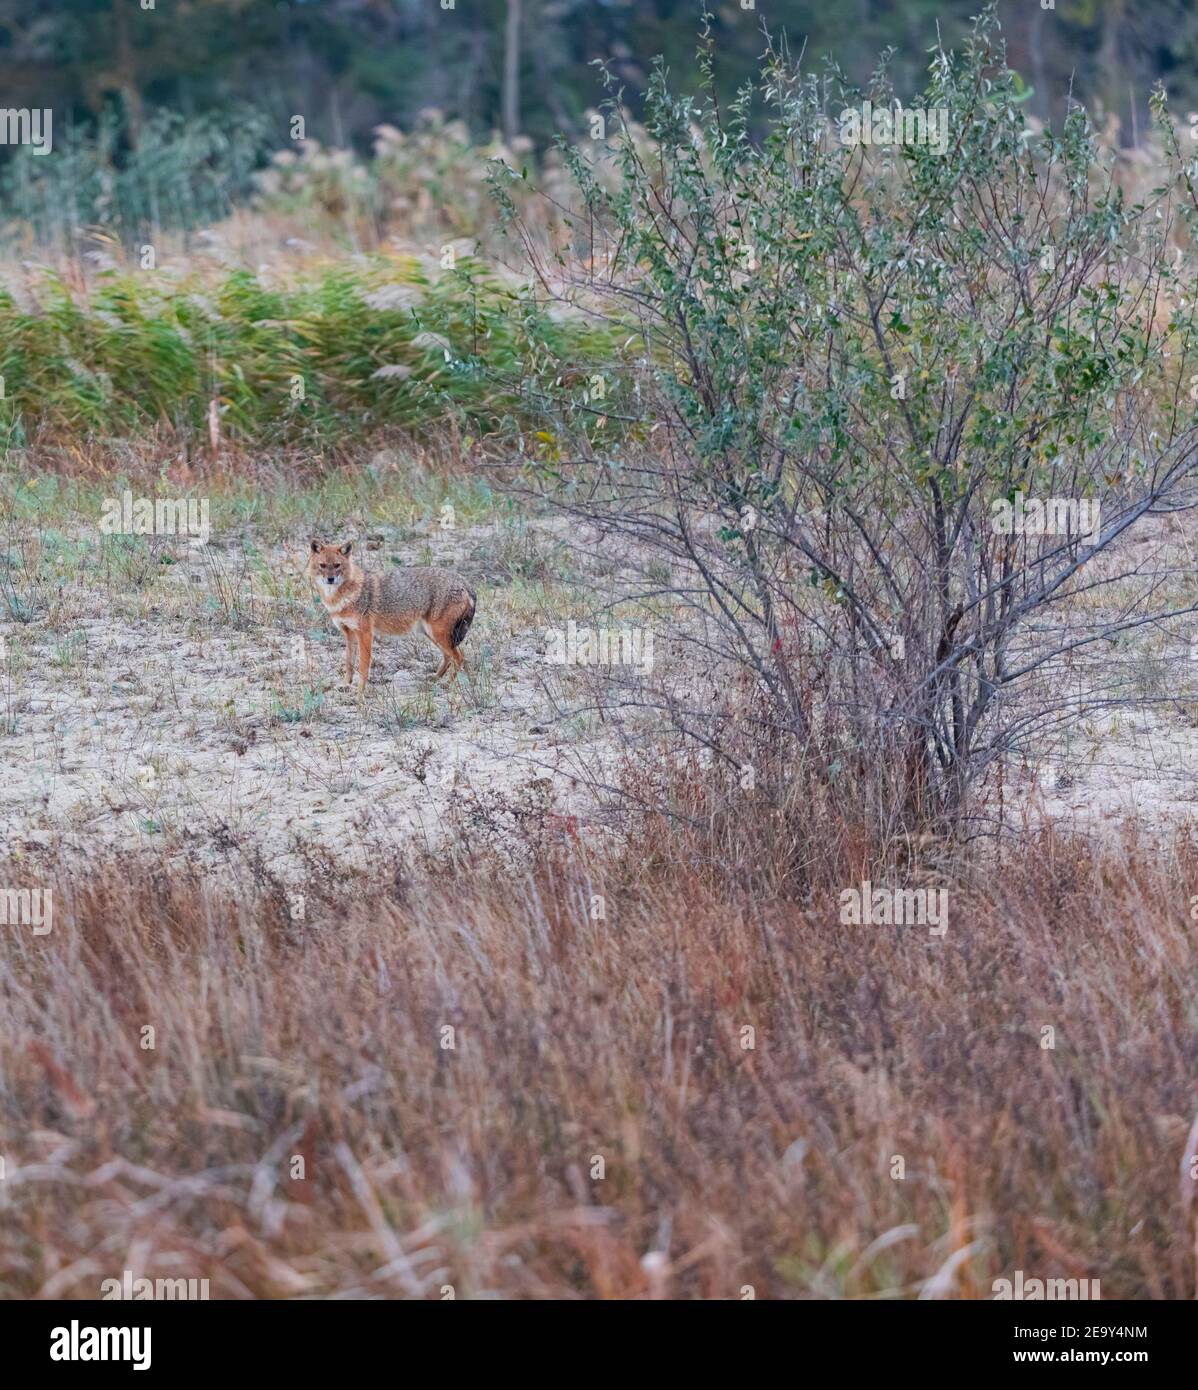 Golden jackal - CHACAL DORADO (Canis aureus), Danube Delta - DELTA DEL DANUBIO, Ramsar Wetland, Unesco World Heritgage Site, Tulcea County, Romania, E Stock Photo